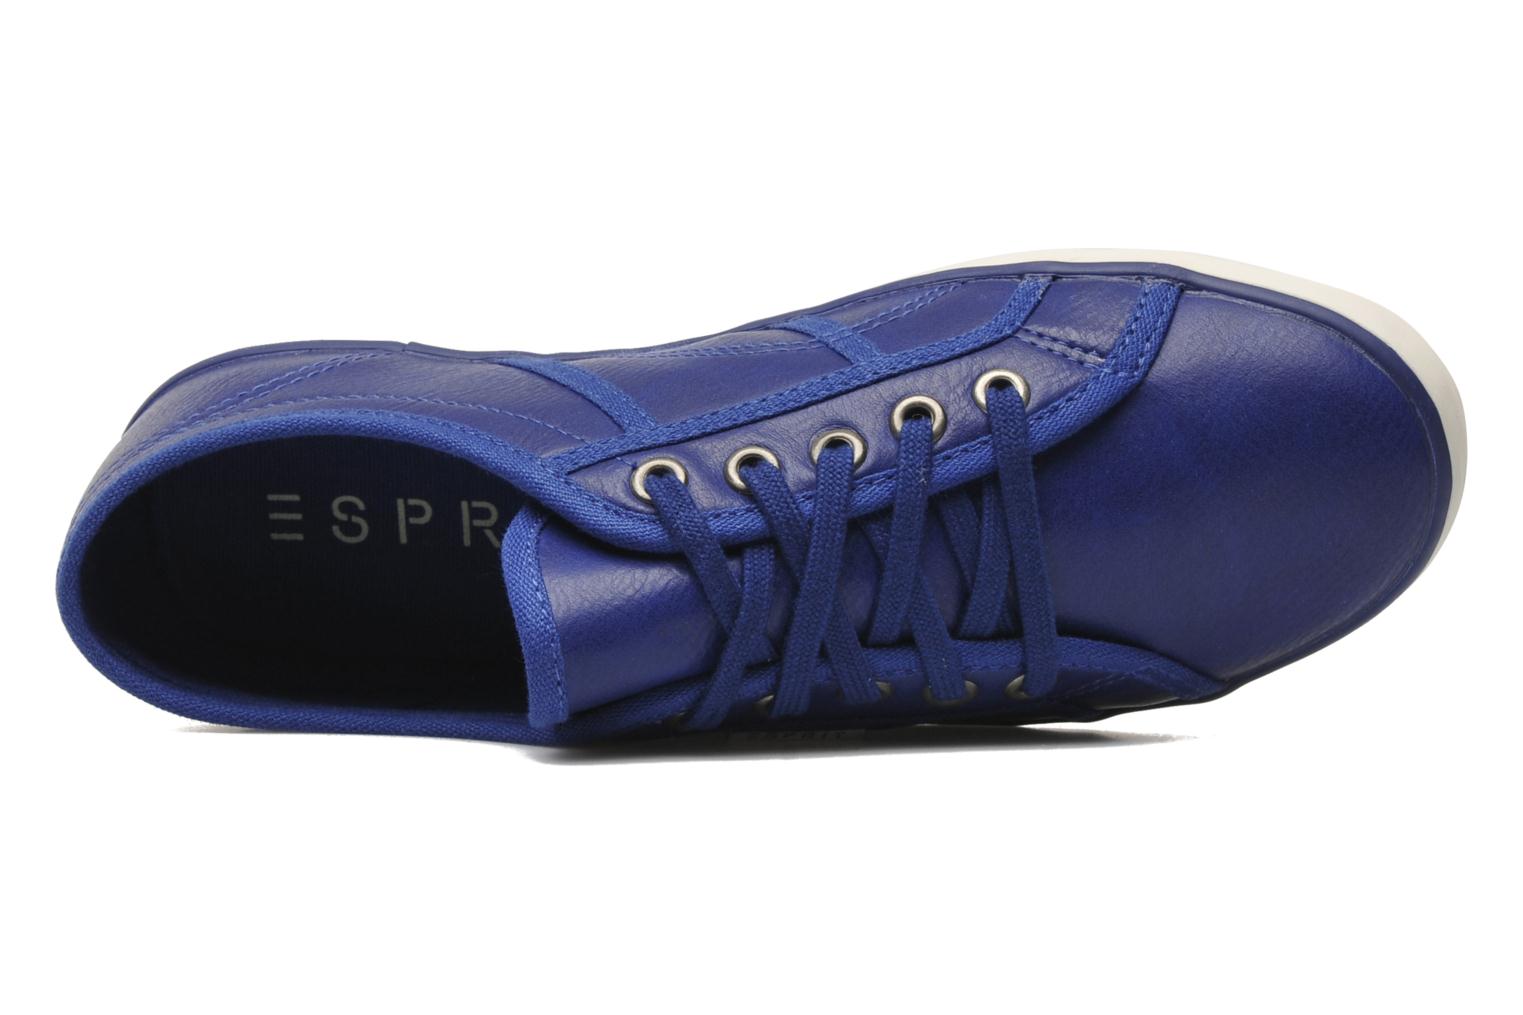 Esprit Italia Lace Up (Azzurro) - Sneakers su Sarenza.it (164296)